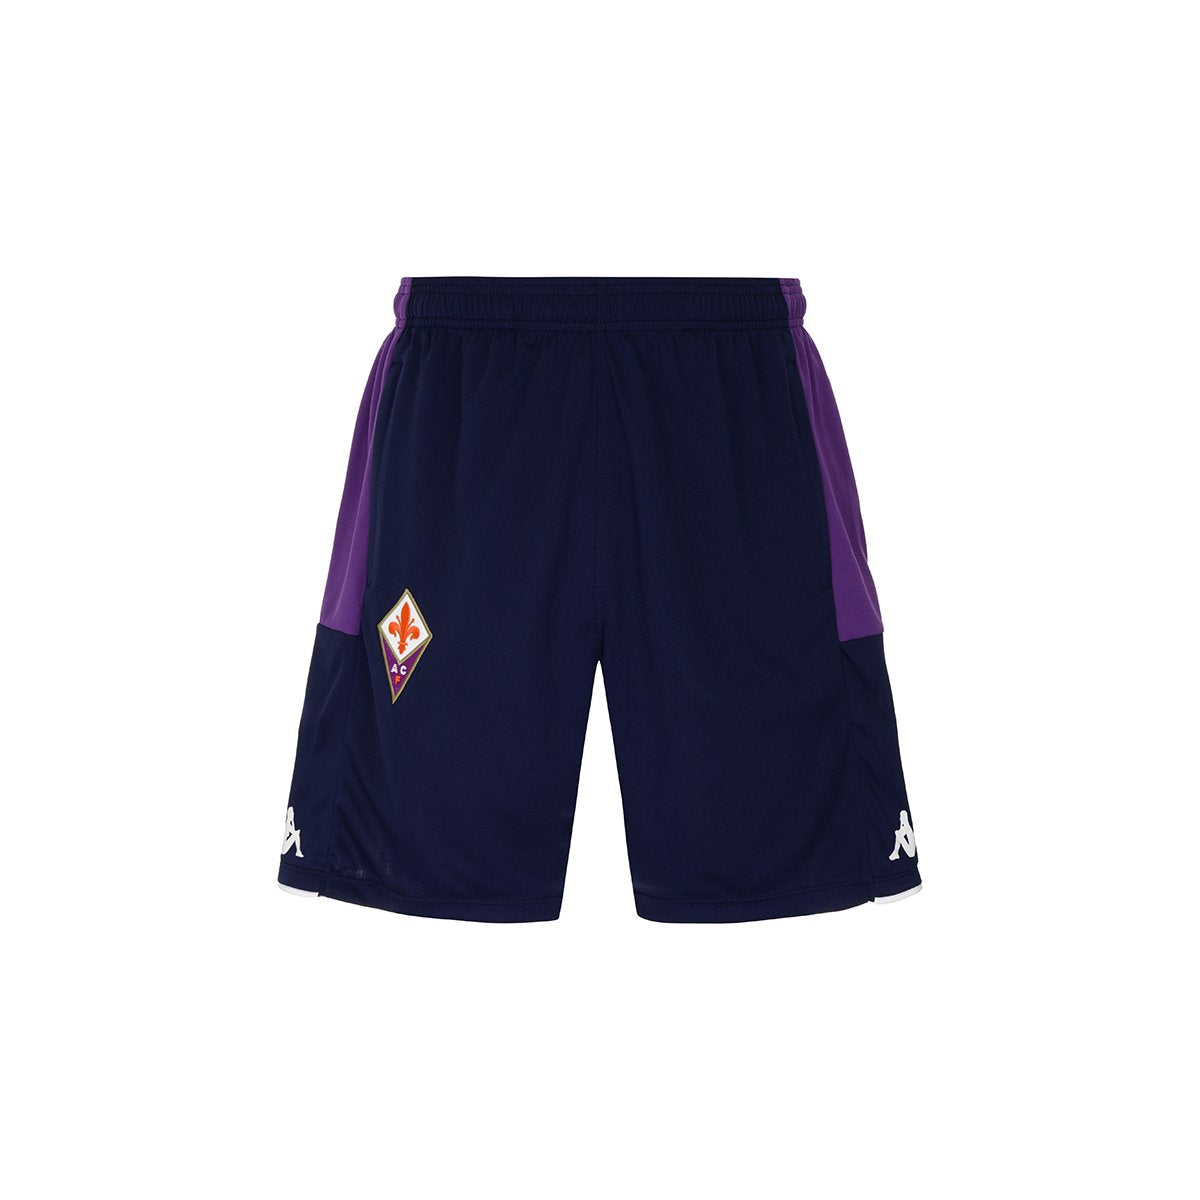 Short Ahorazip Pro 5 Fiorentina Hombre  Azul - Imagen 1